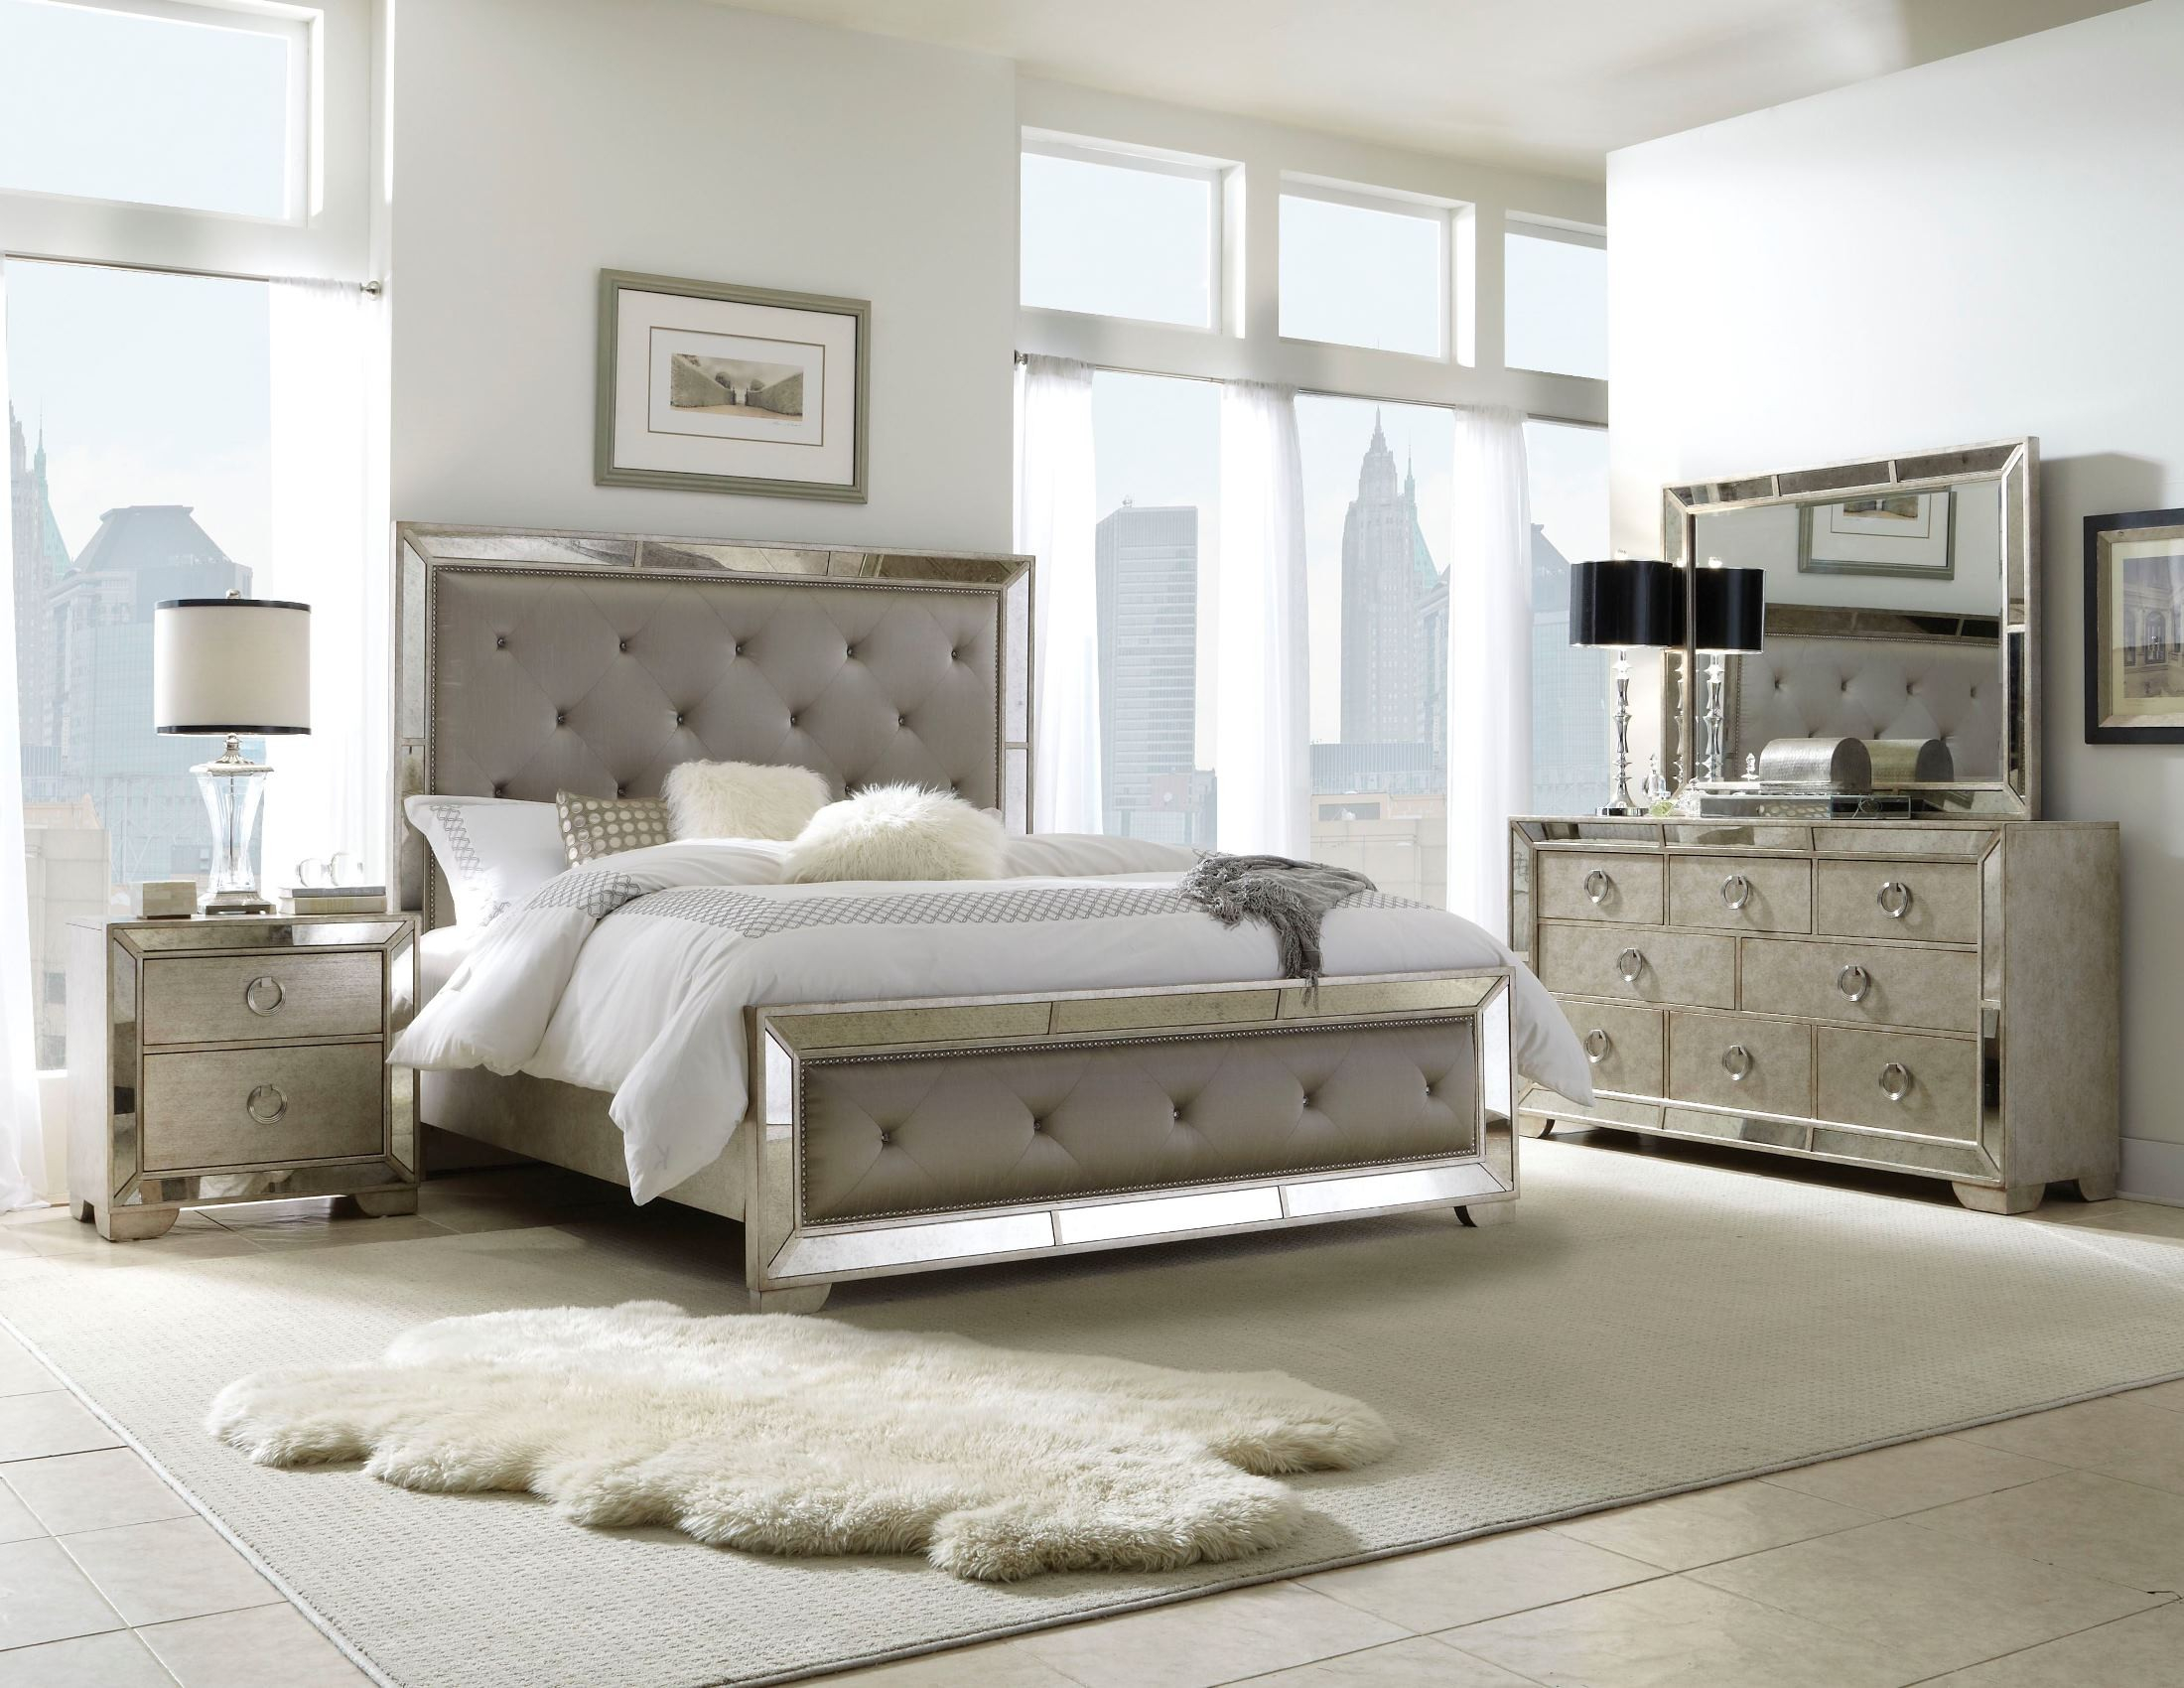 Ailey Platform Bedroom Set regarding size 2200 X 1700